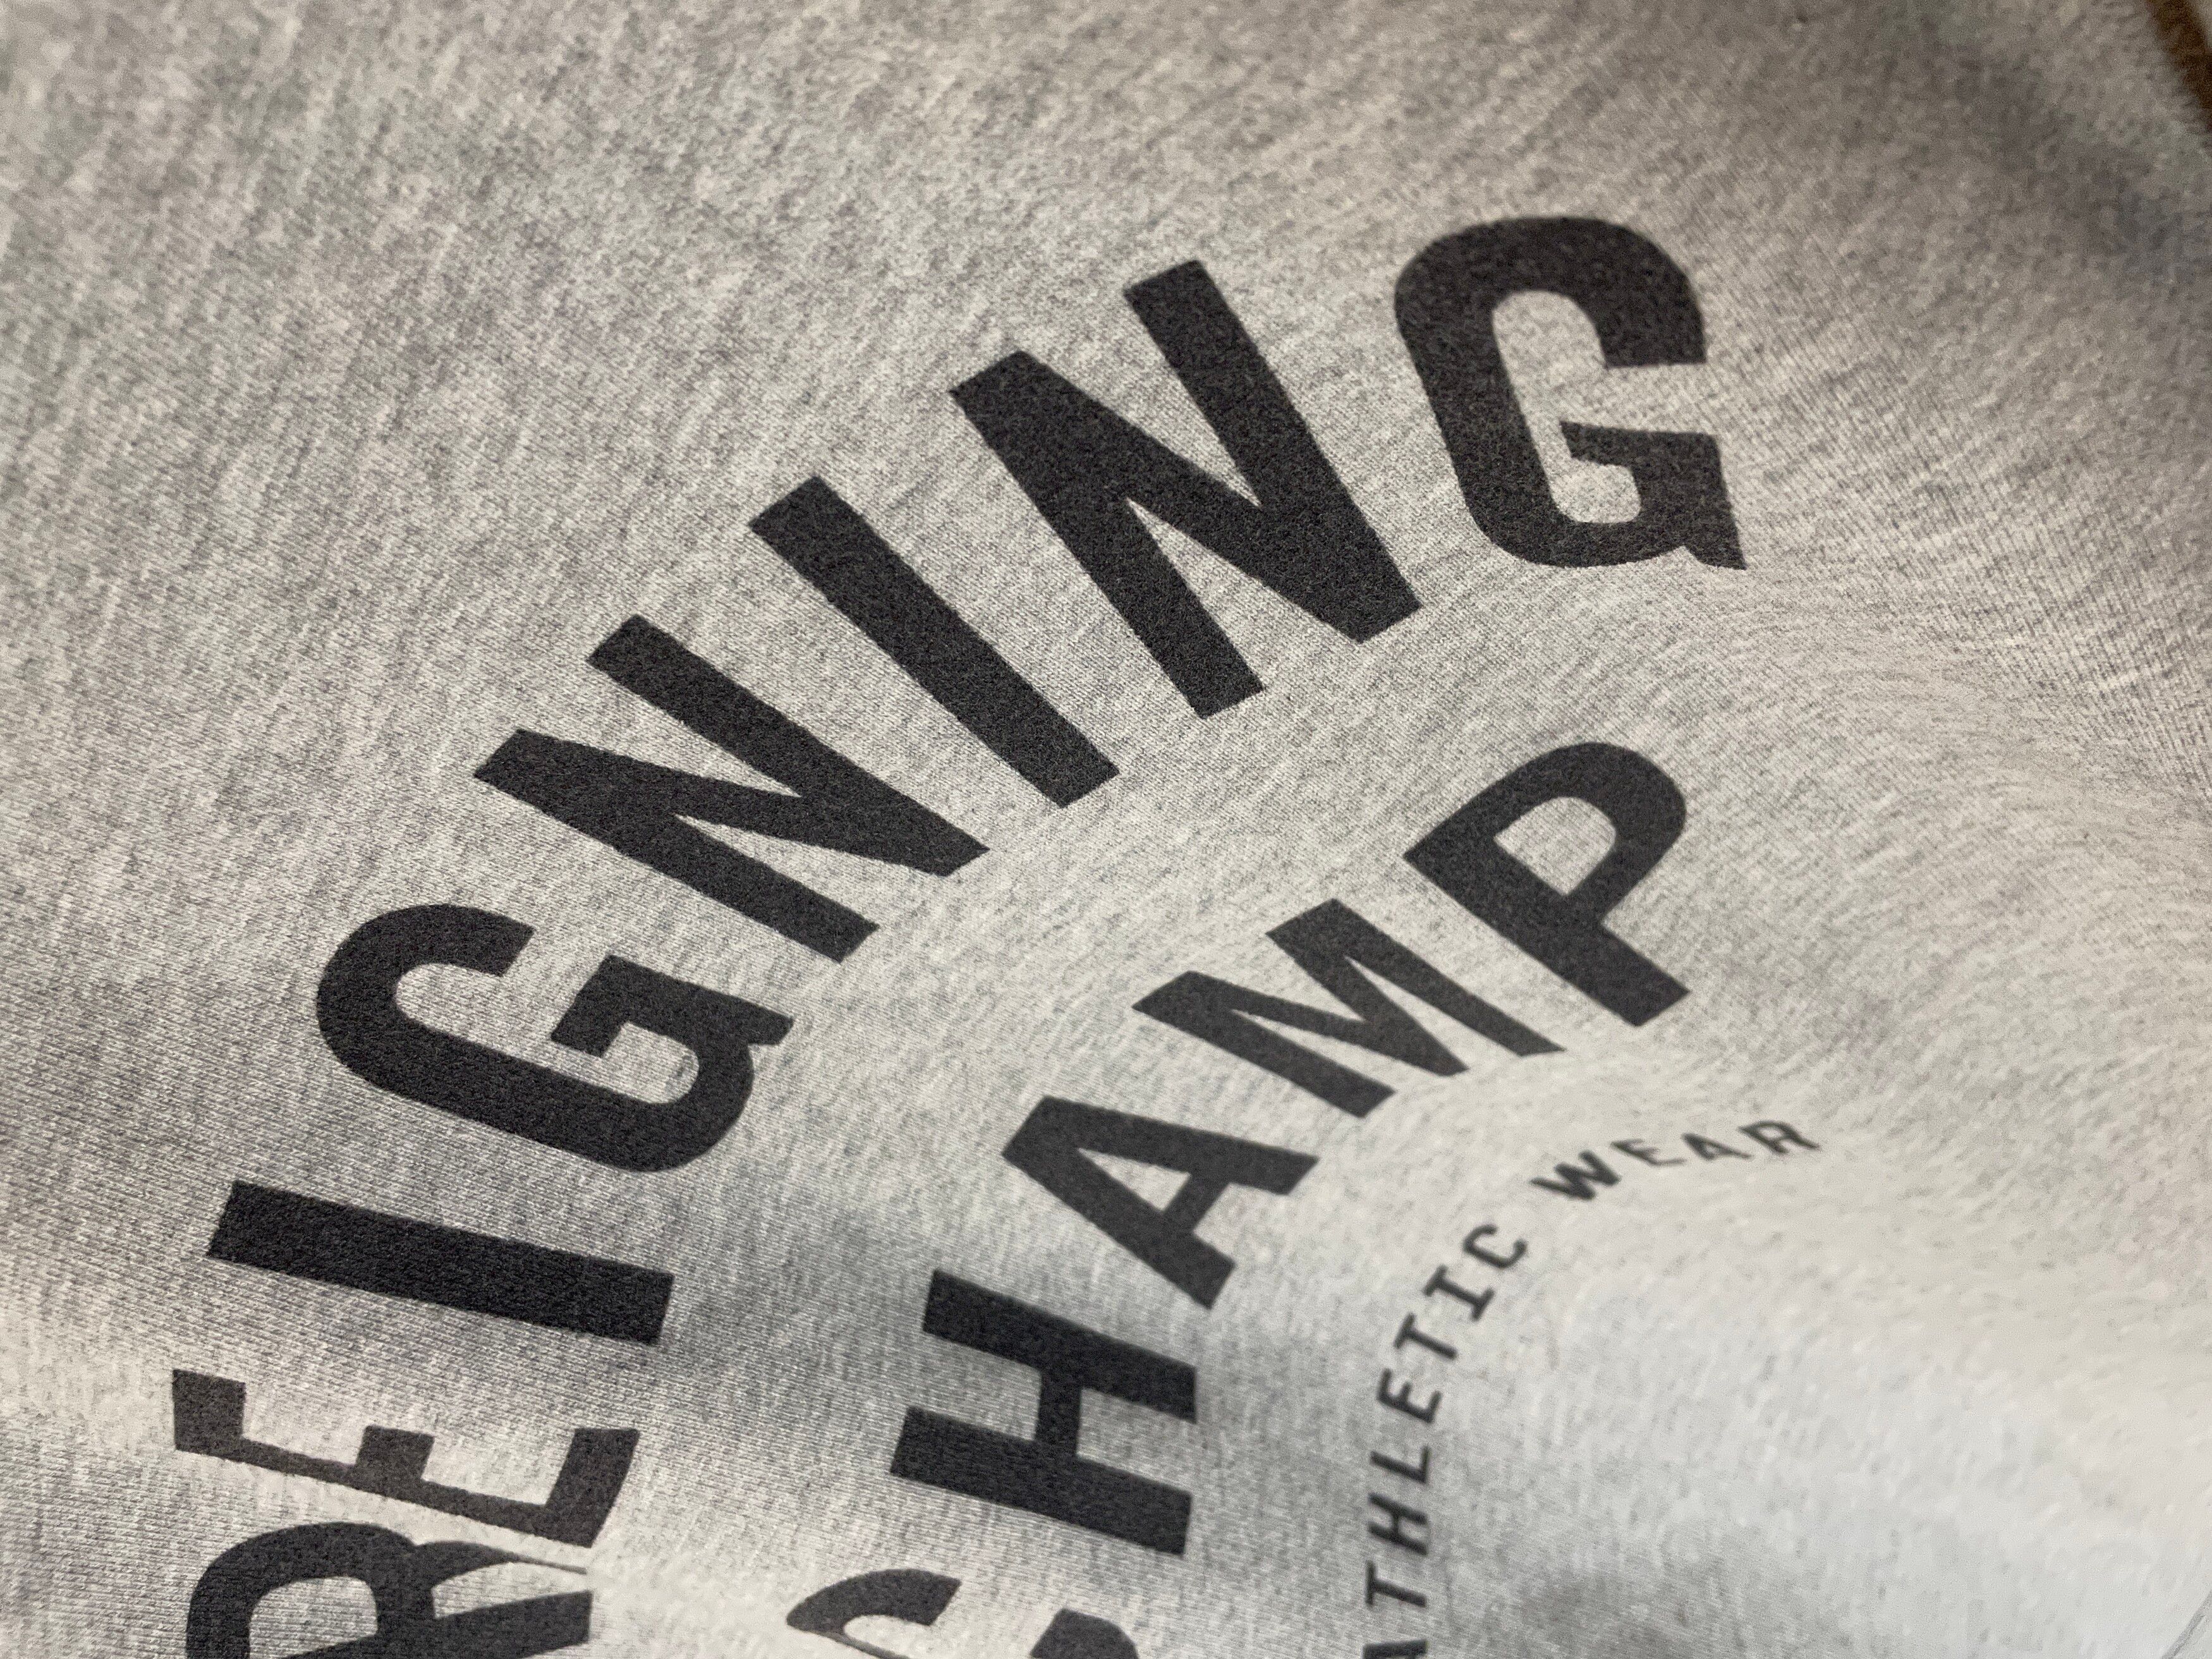 Reigning Champ Reigning Champ Gym Logo Crewneck Sweatshirt Size US S / EU 44-46 / 1 - 2 Preview